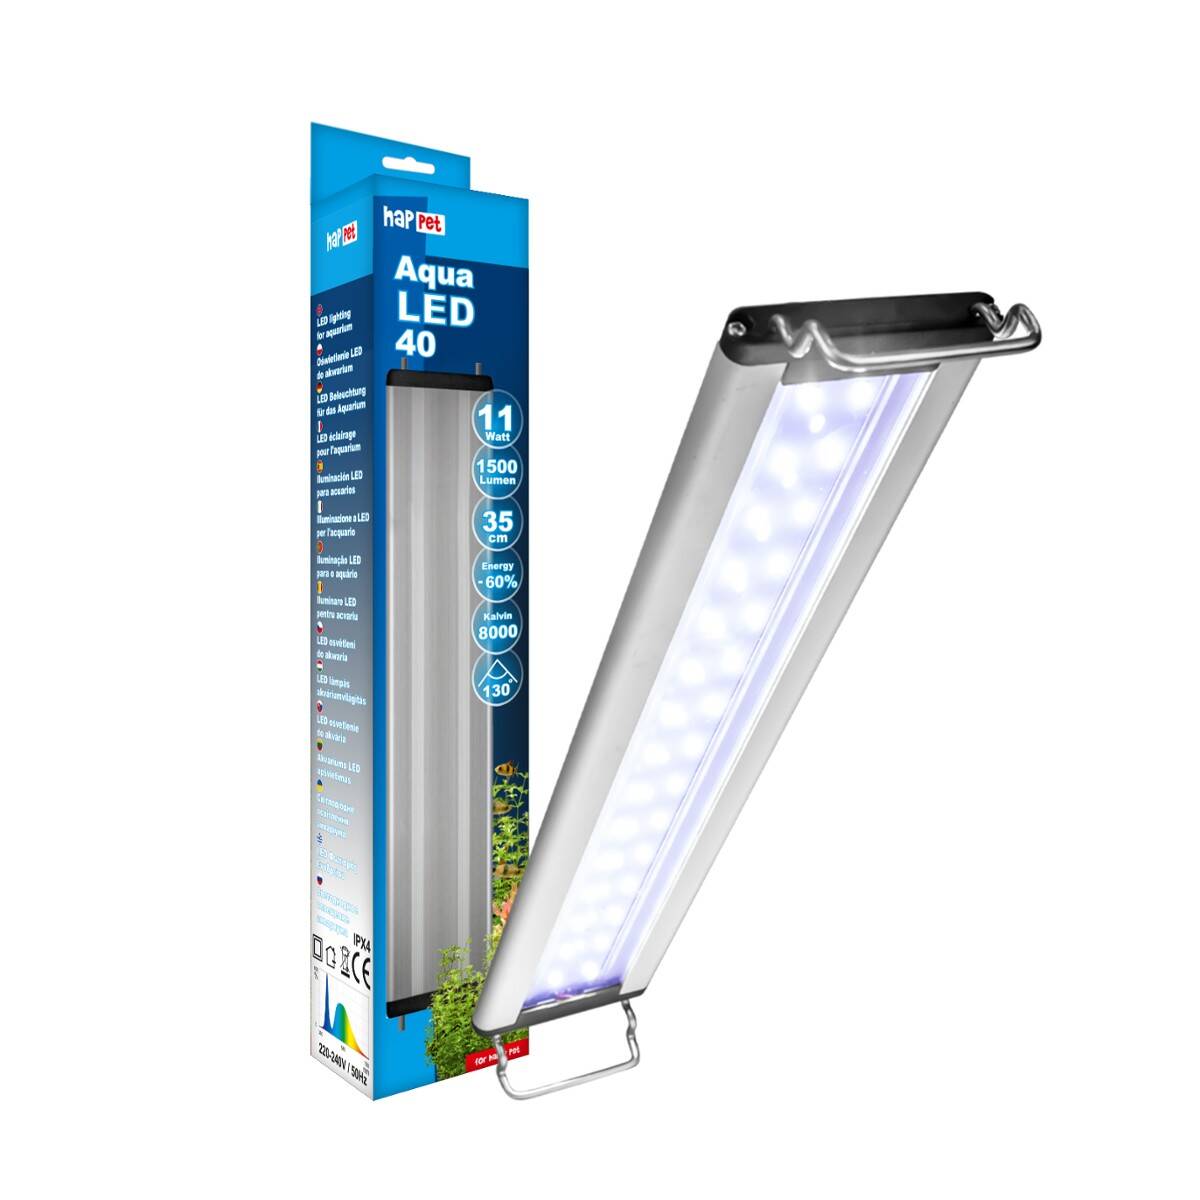 LED-Lampe für Aquarien - AquaLED Happet 142cm (S-LB30JW)